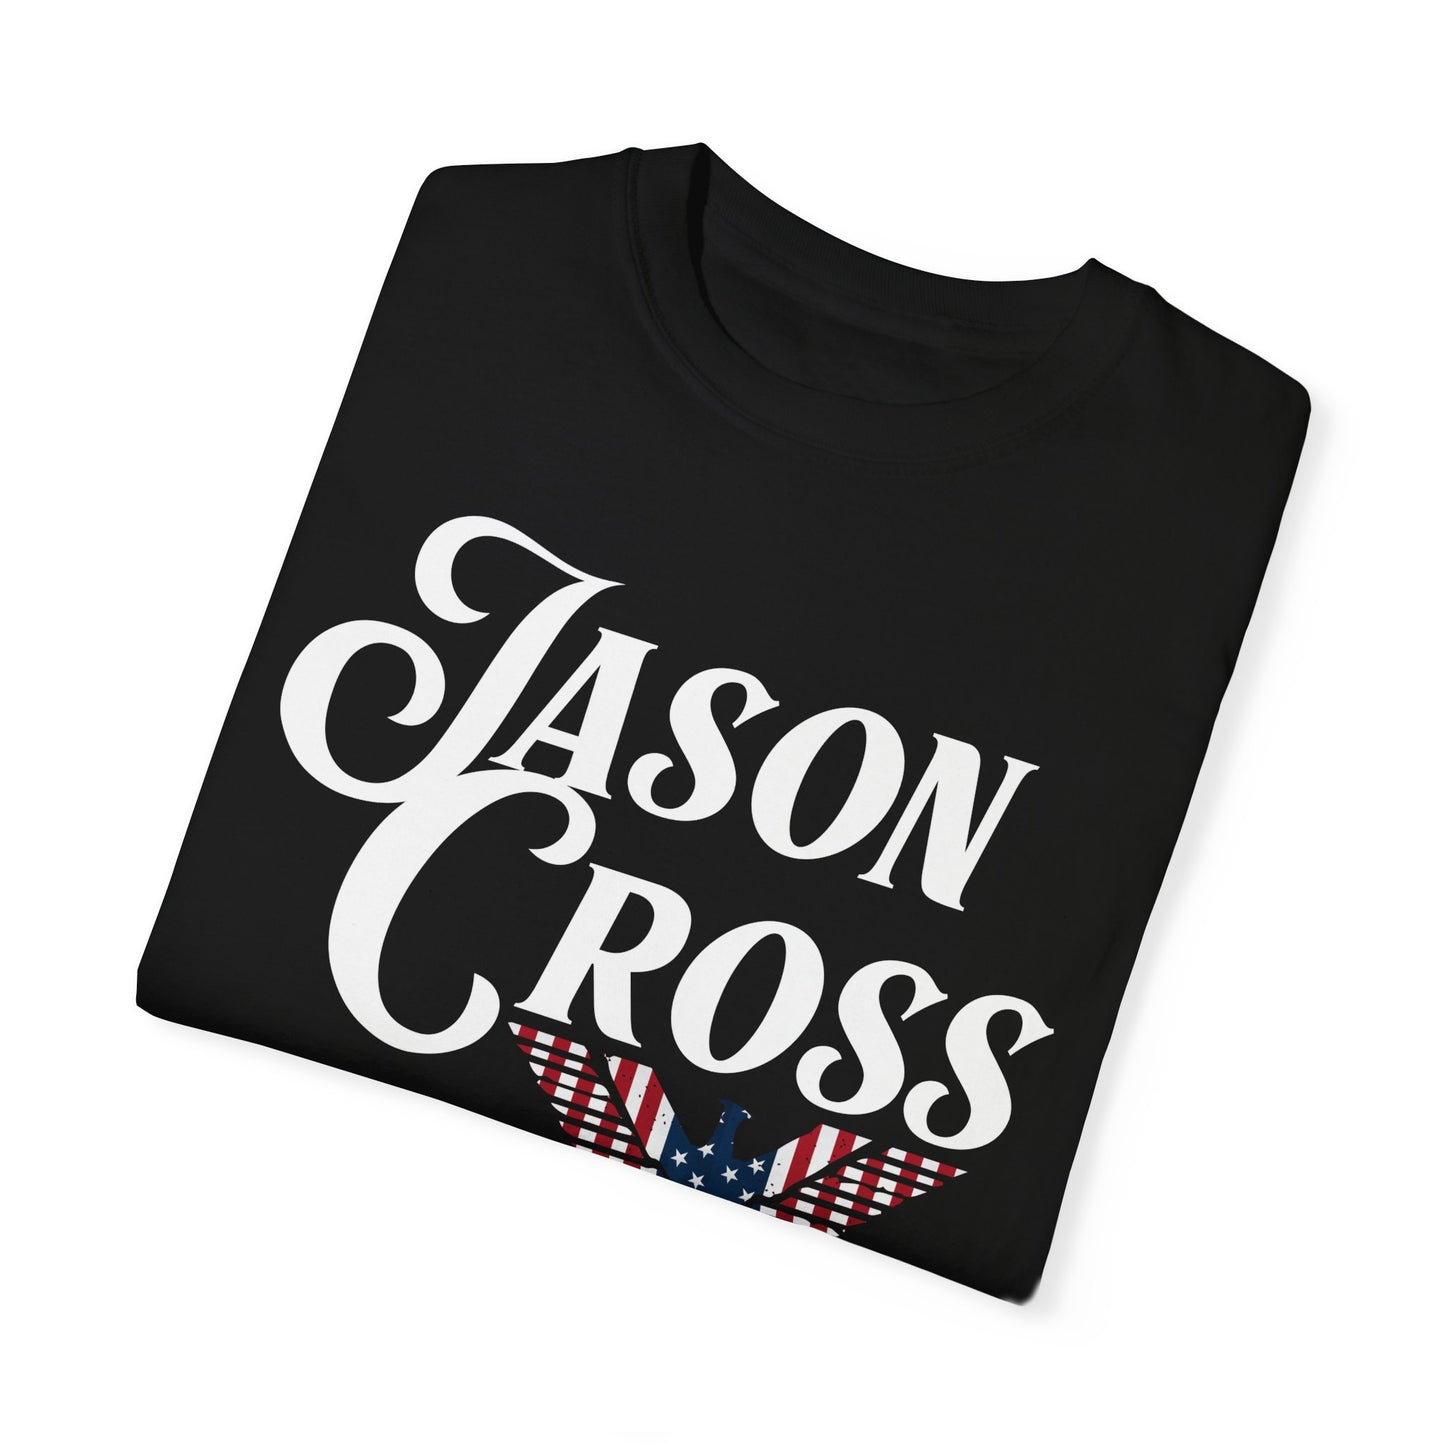 Jason Cross Phoenix Logo USA T Shirt